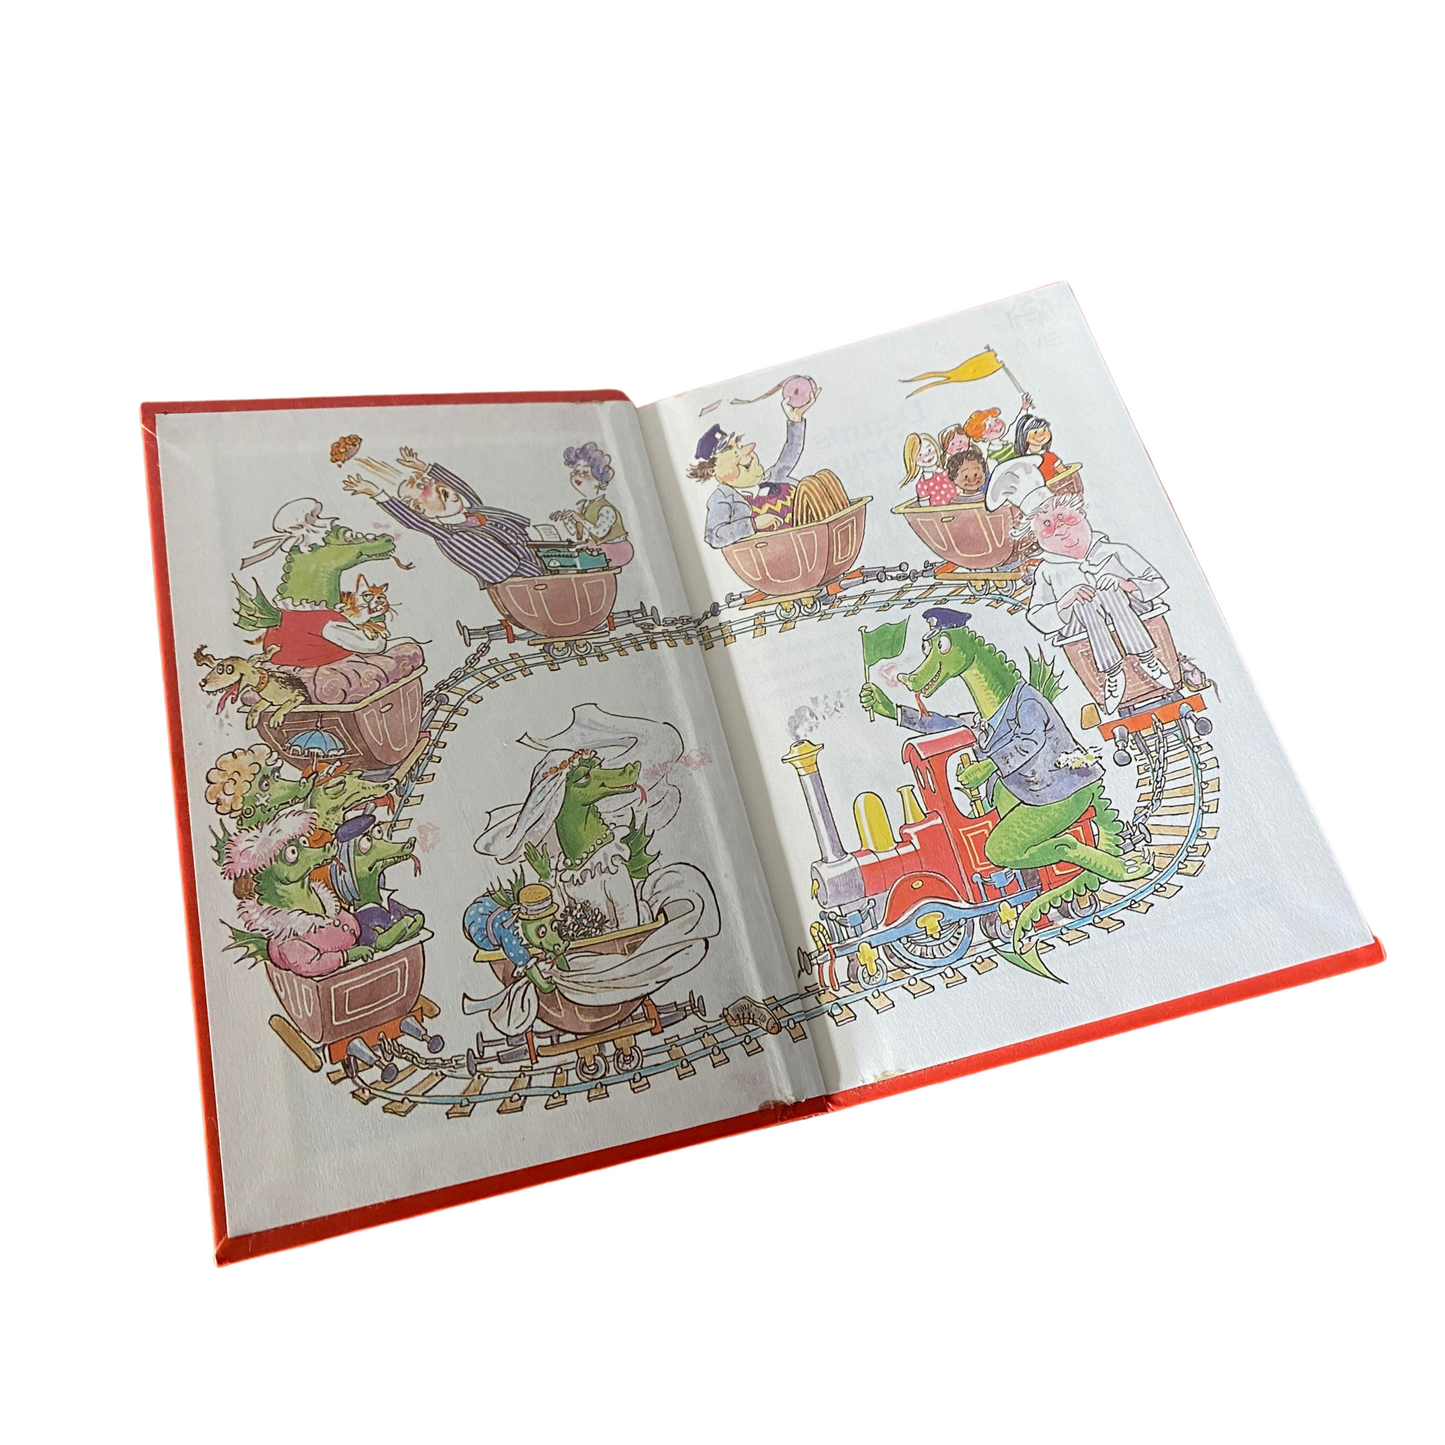 Dennis the Dragon, Dennis finds a new job, vintage ladybird book.. Great gift idea